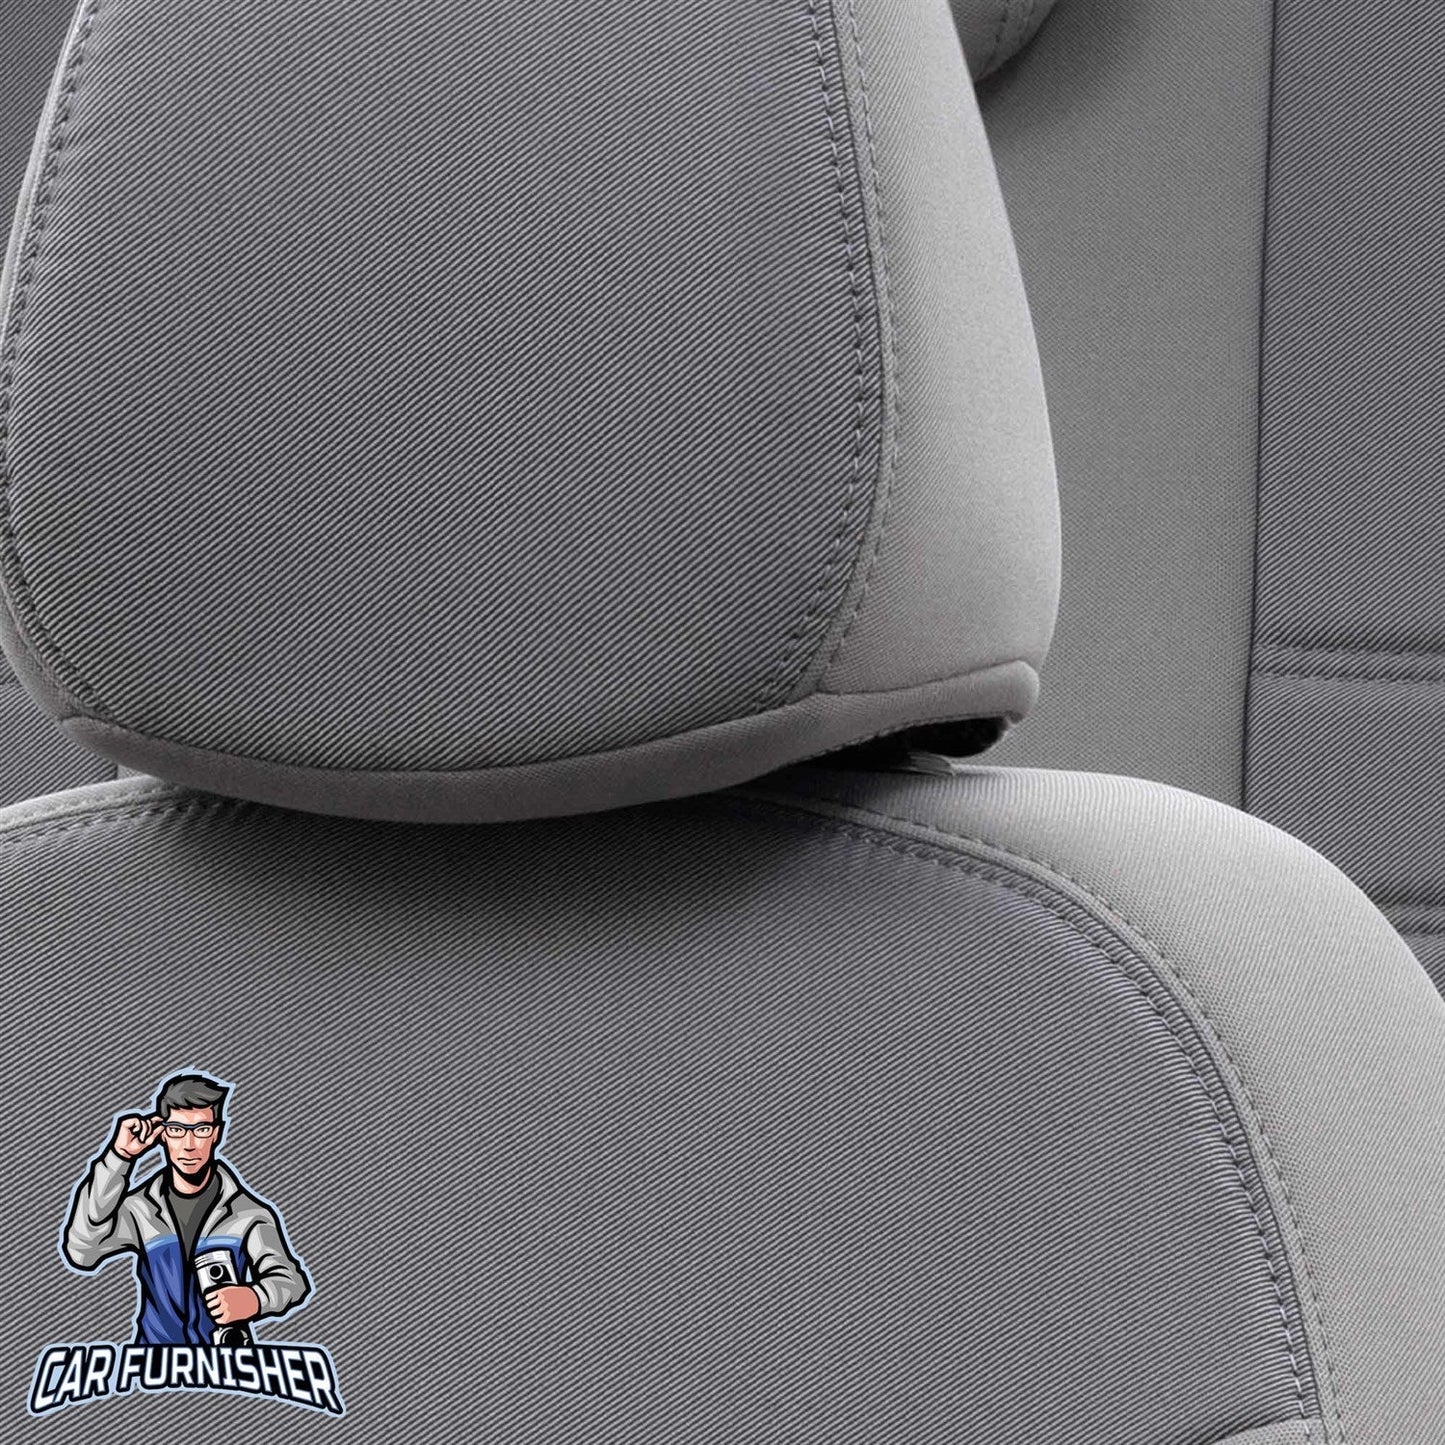 Nissan Pathfinder Seat Cover Original Jacquard Design Gray Jacquard Fabric